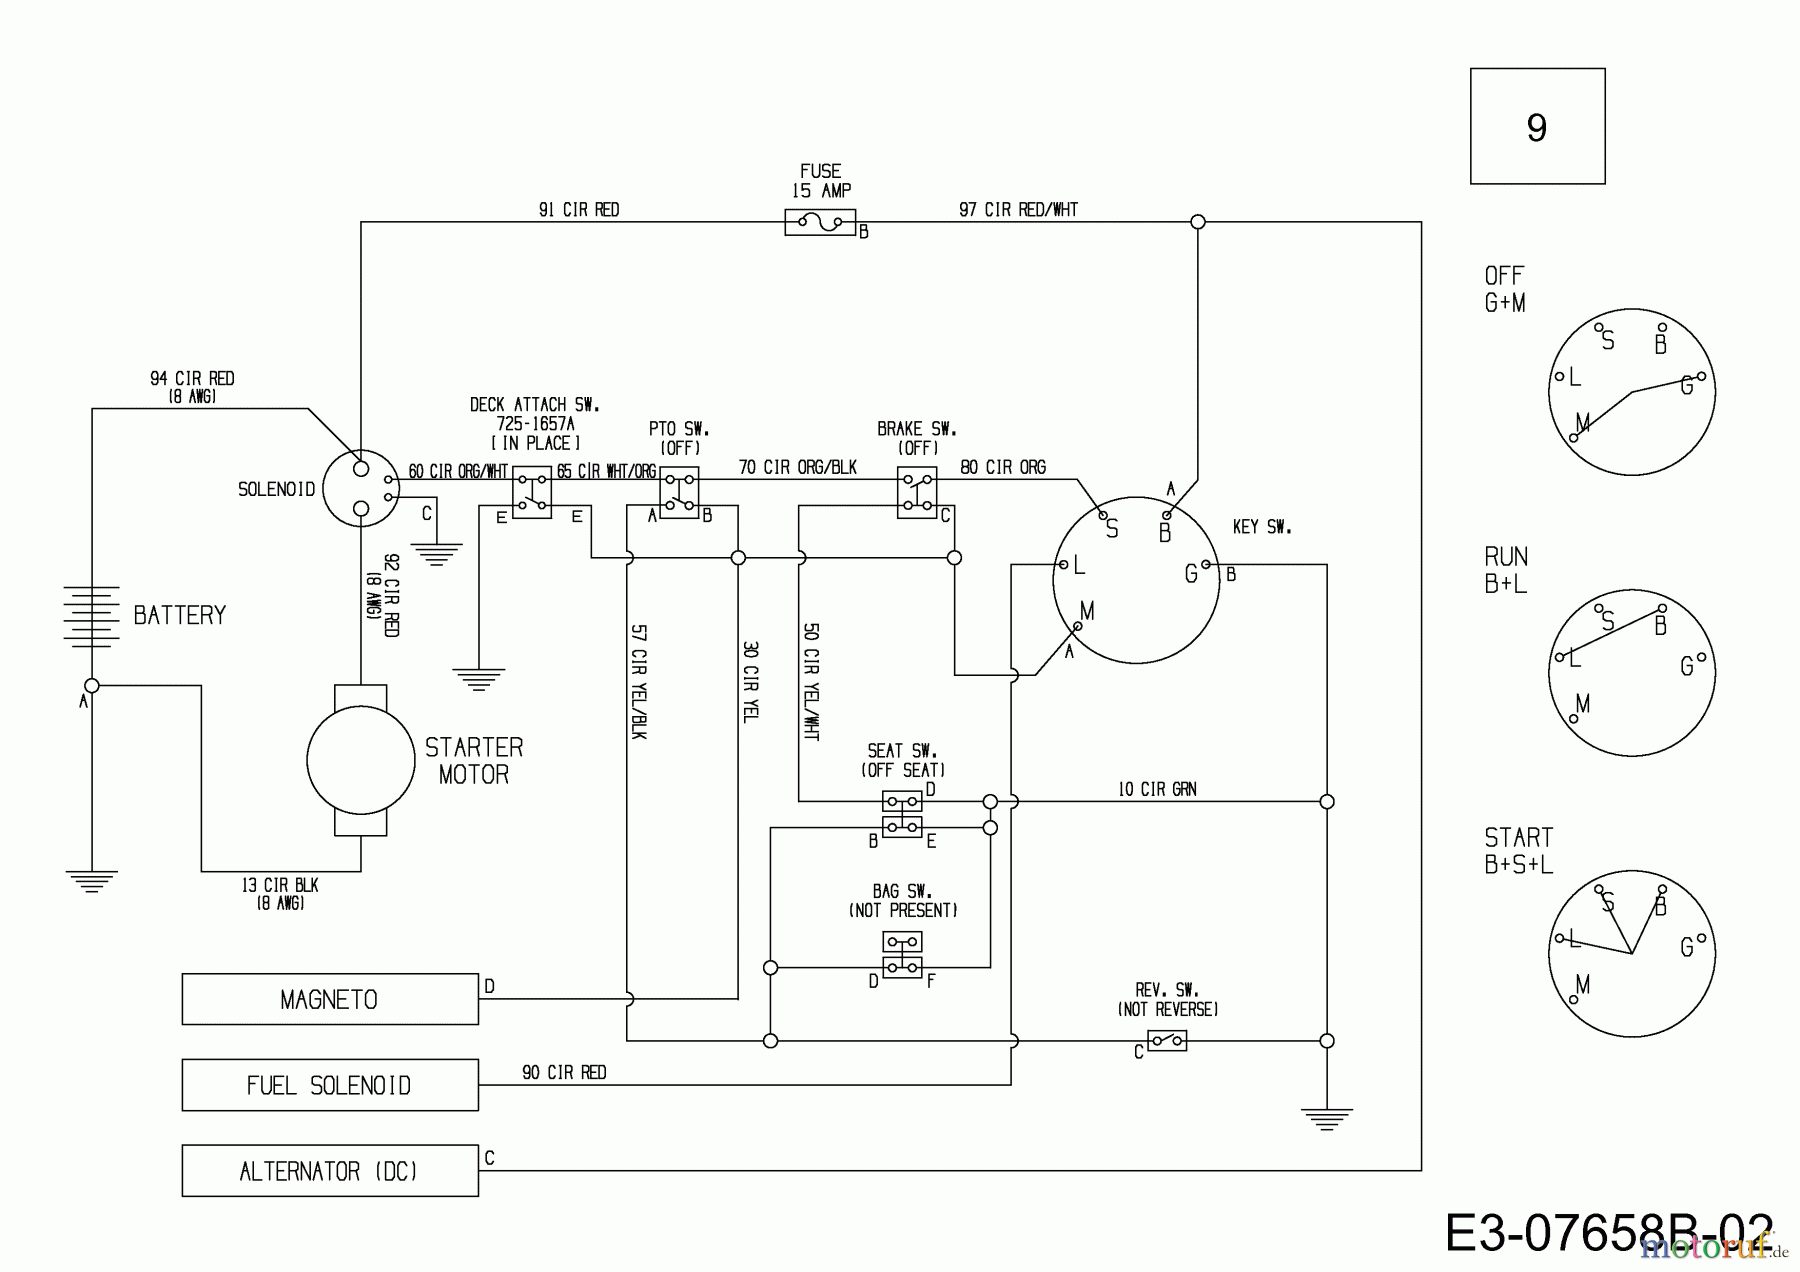  WOLF-Garten Expert Lawn tractors Scooter Pro 13B226ED650  (2014) Wiring diagram